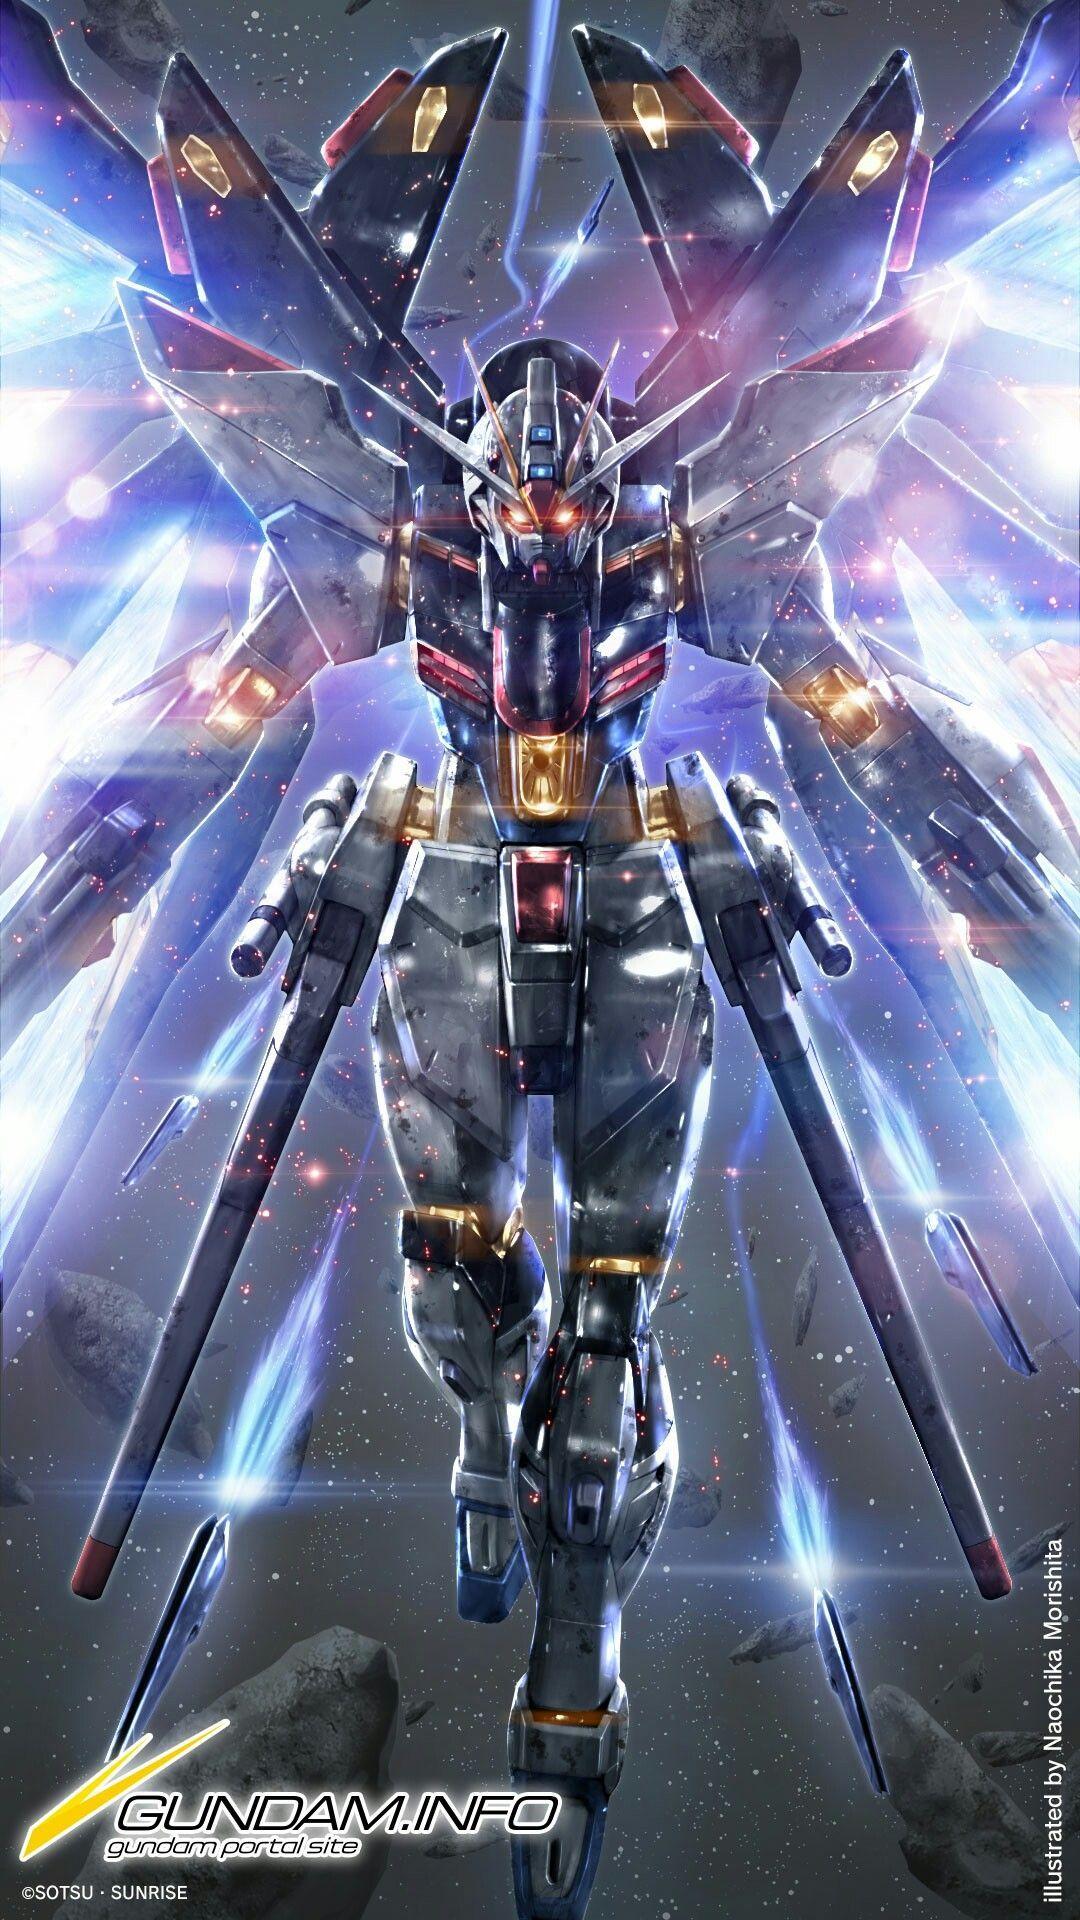 Gundam.info Strike Freedom Wallpaper. Gundam wallpaper, Gundam art